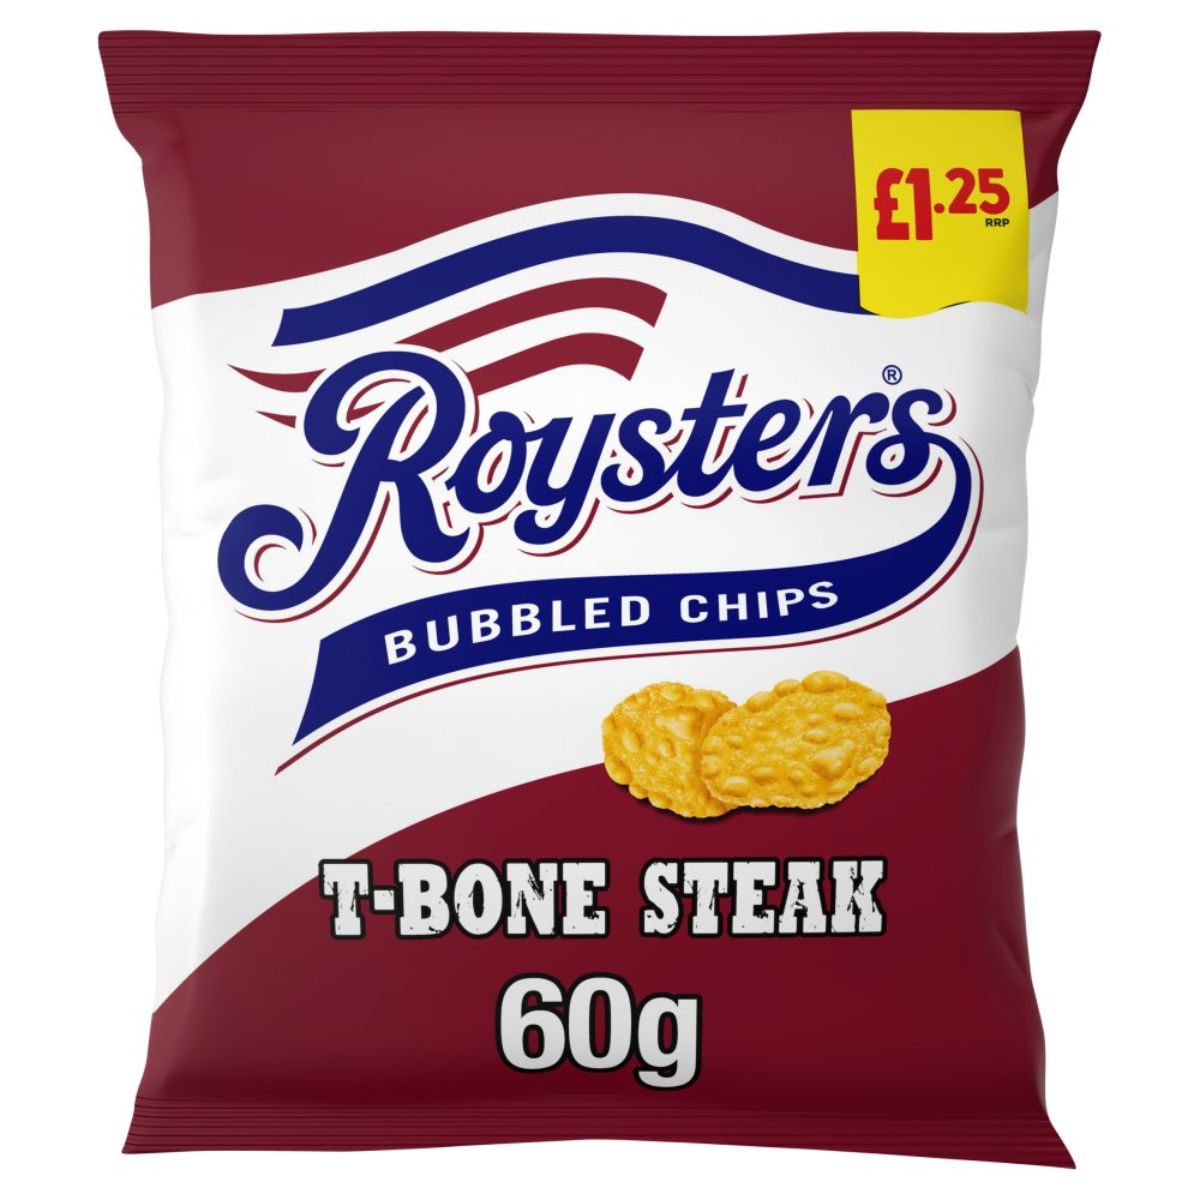 Roysters - Bubbled Chips - T Bone Steak - 60g chips.